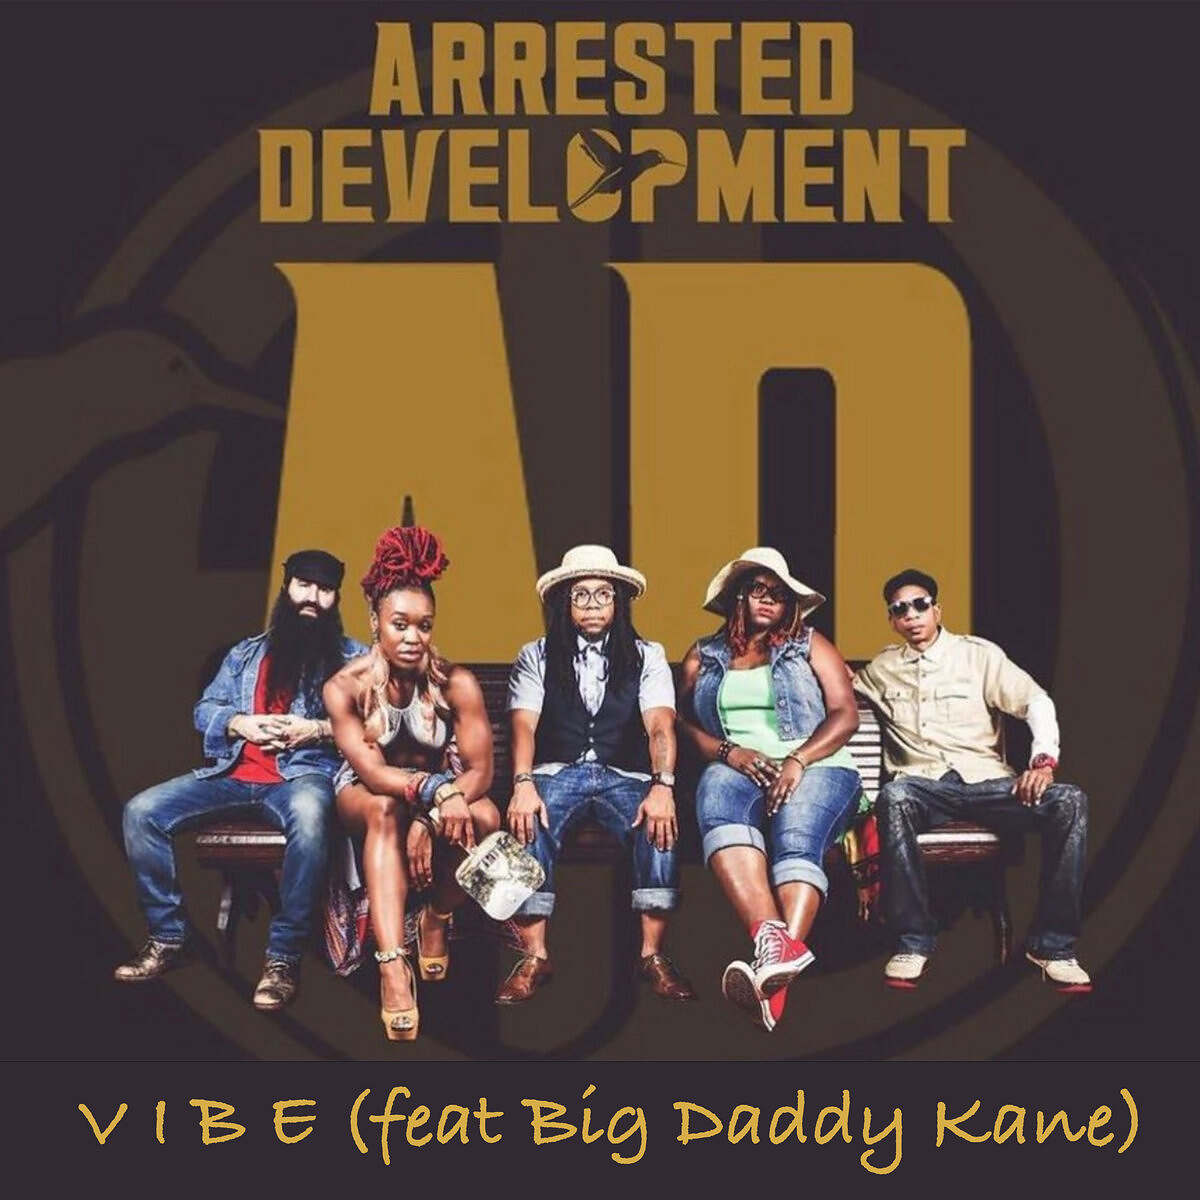 MP3: Arrested Development feat. Big Daddy Kane, Cleveland P. Jones, & Tasha LaRae - Vibe